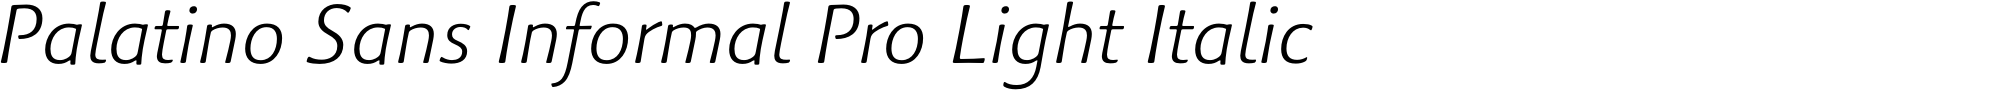 Palatino Sans Informal Pro Light Italic image